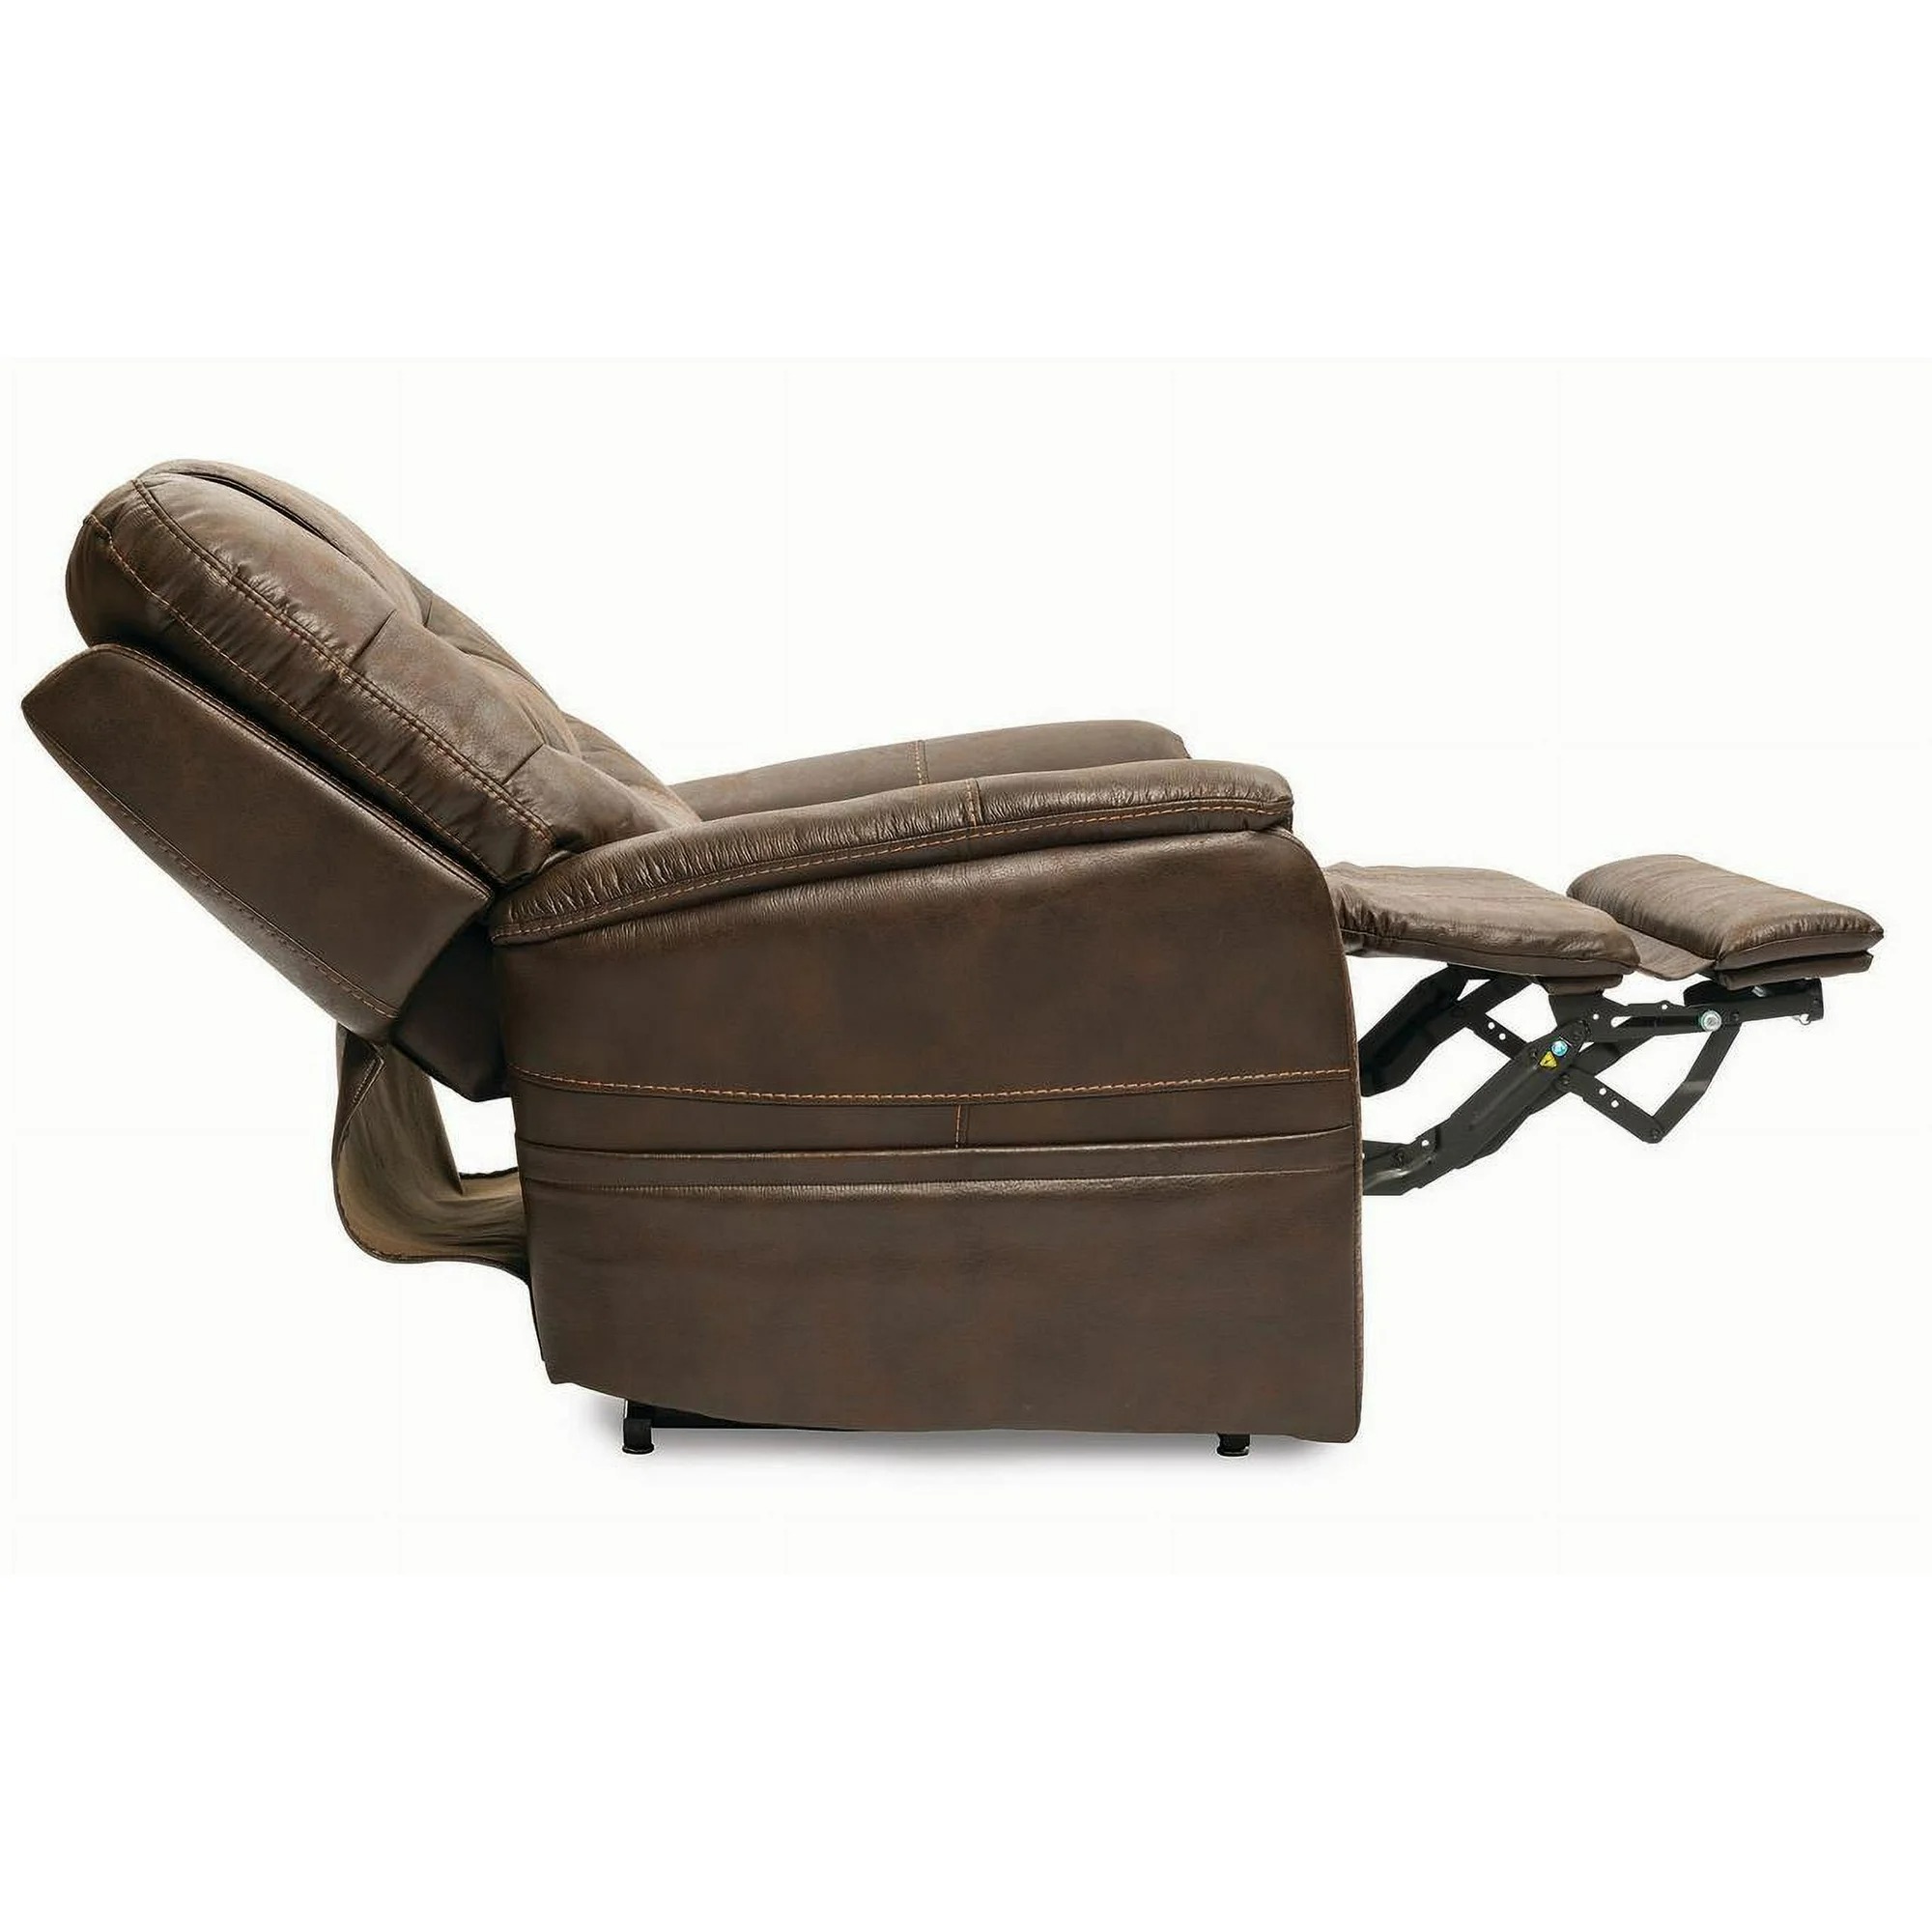 VivaLift! Elegance 2 - PLR-975 side view of reclined position